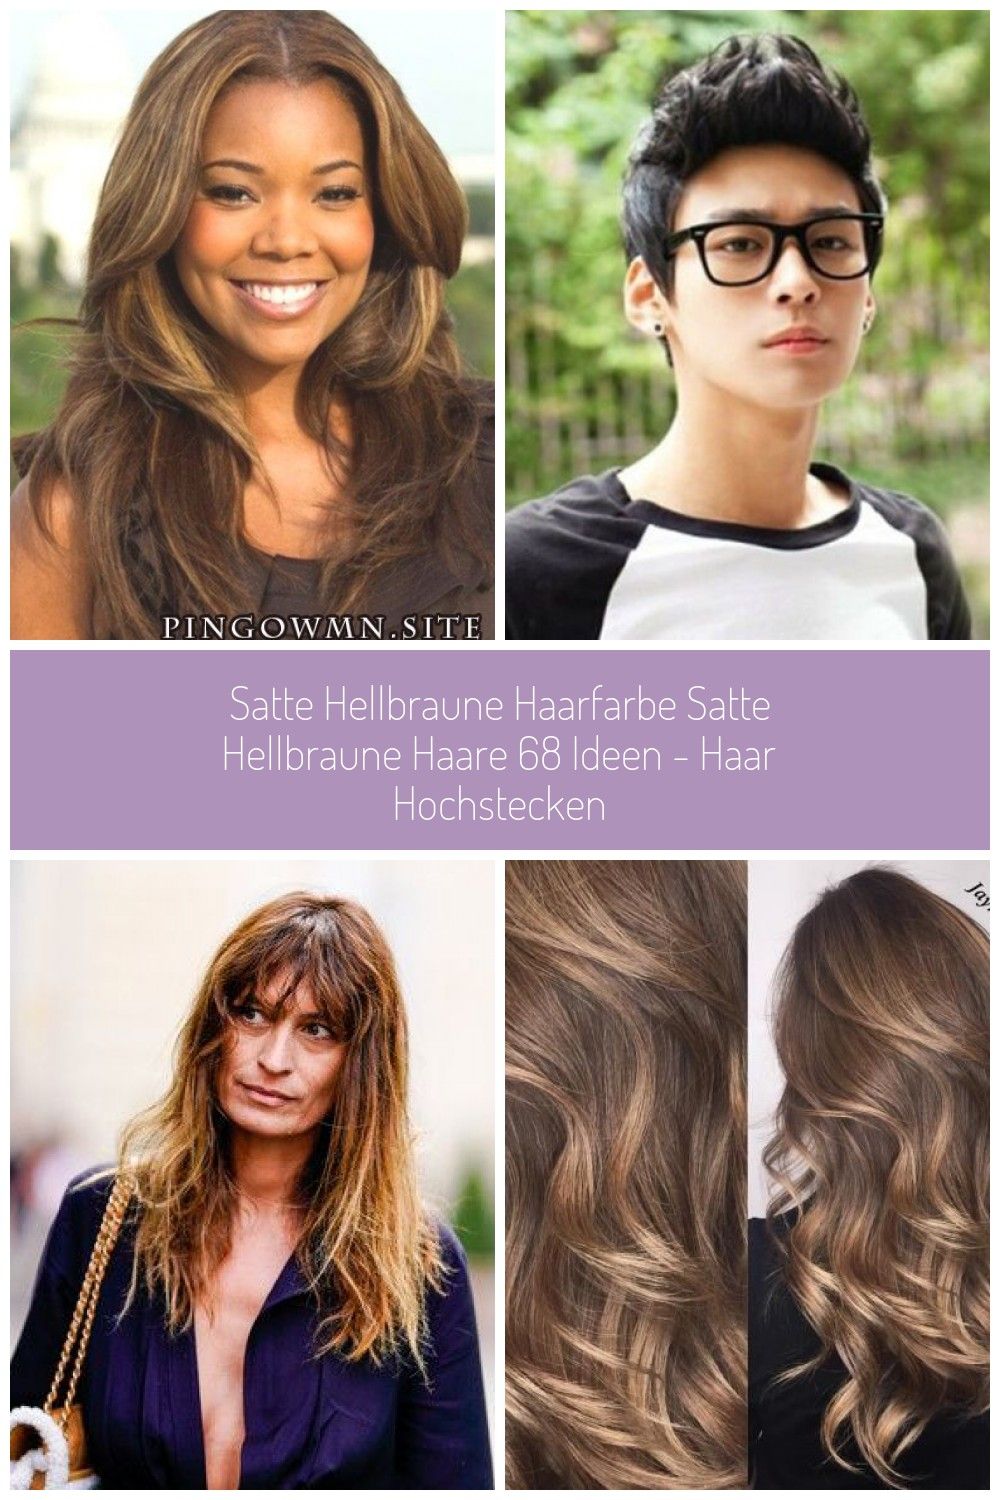 #Haar #Haare #Haarfarbe #Hellbraune #Hochstecken #Ideen